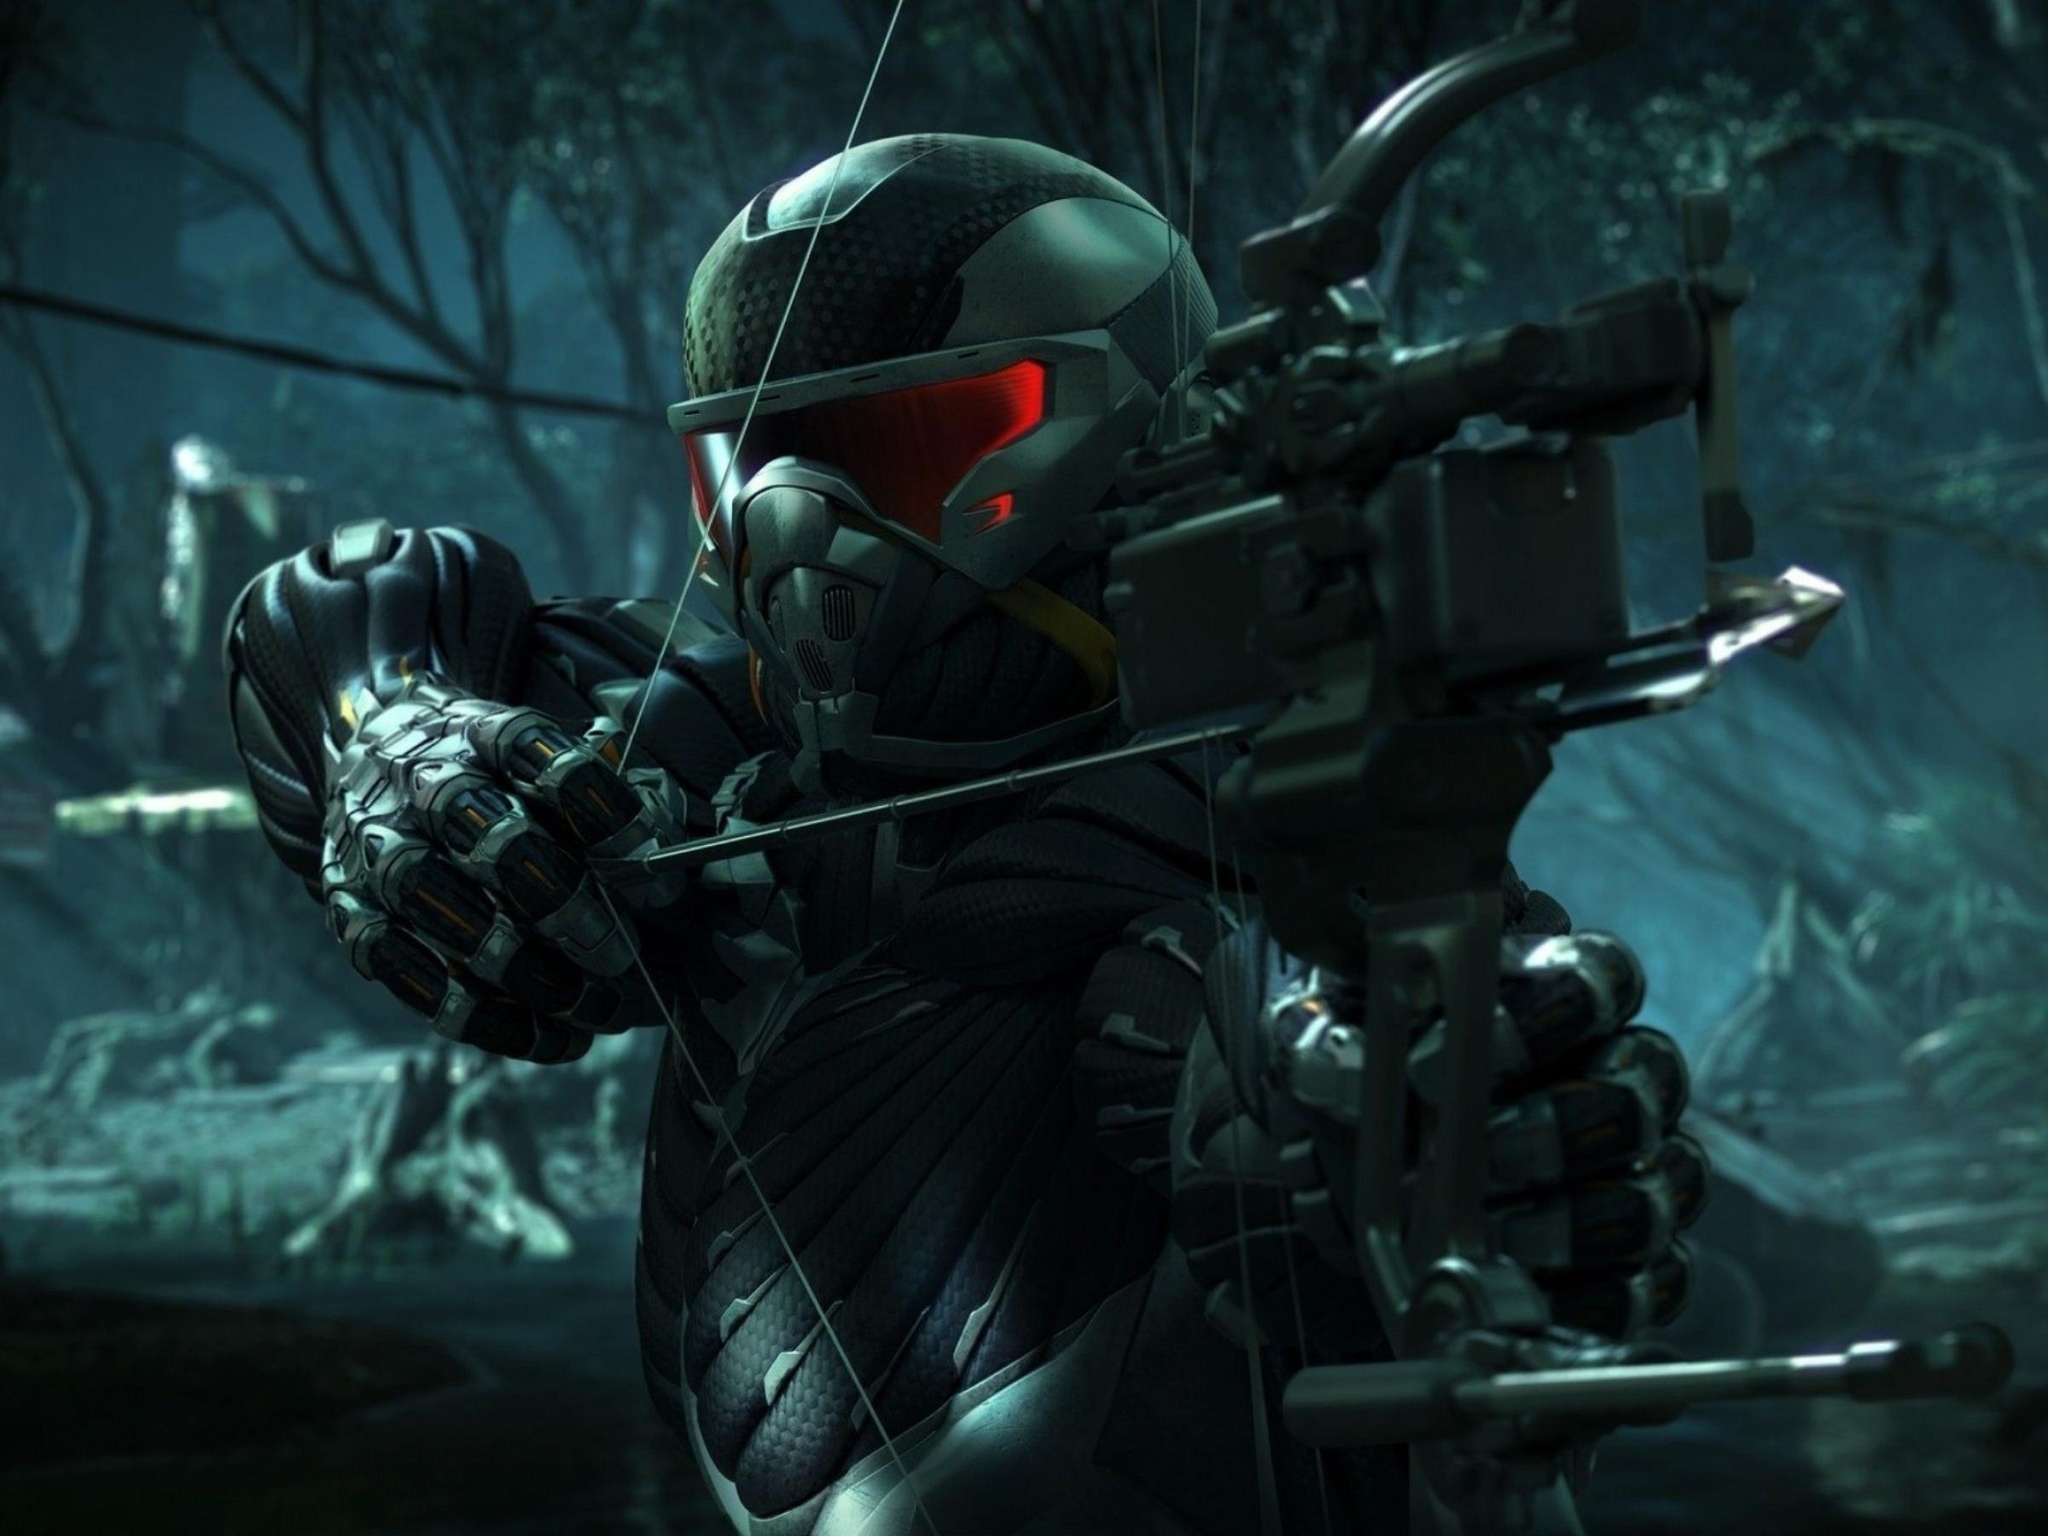 Картинка: Crysis 3, костюм, лук, стрелы, прицел